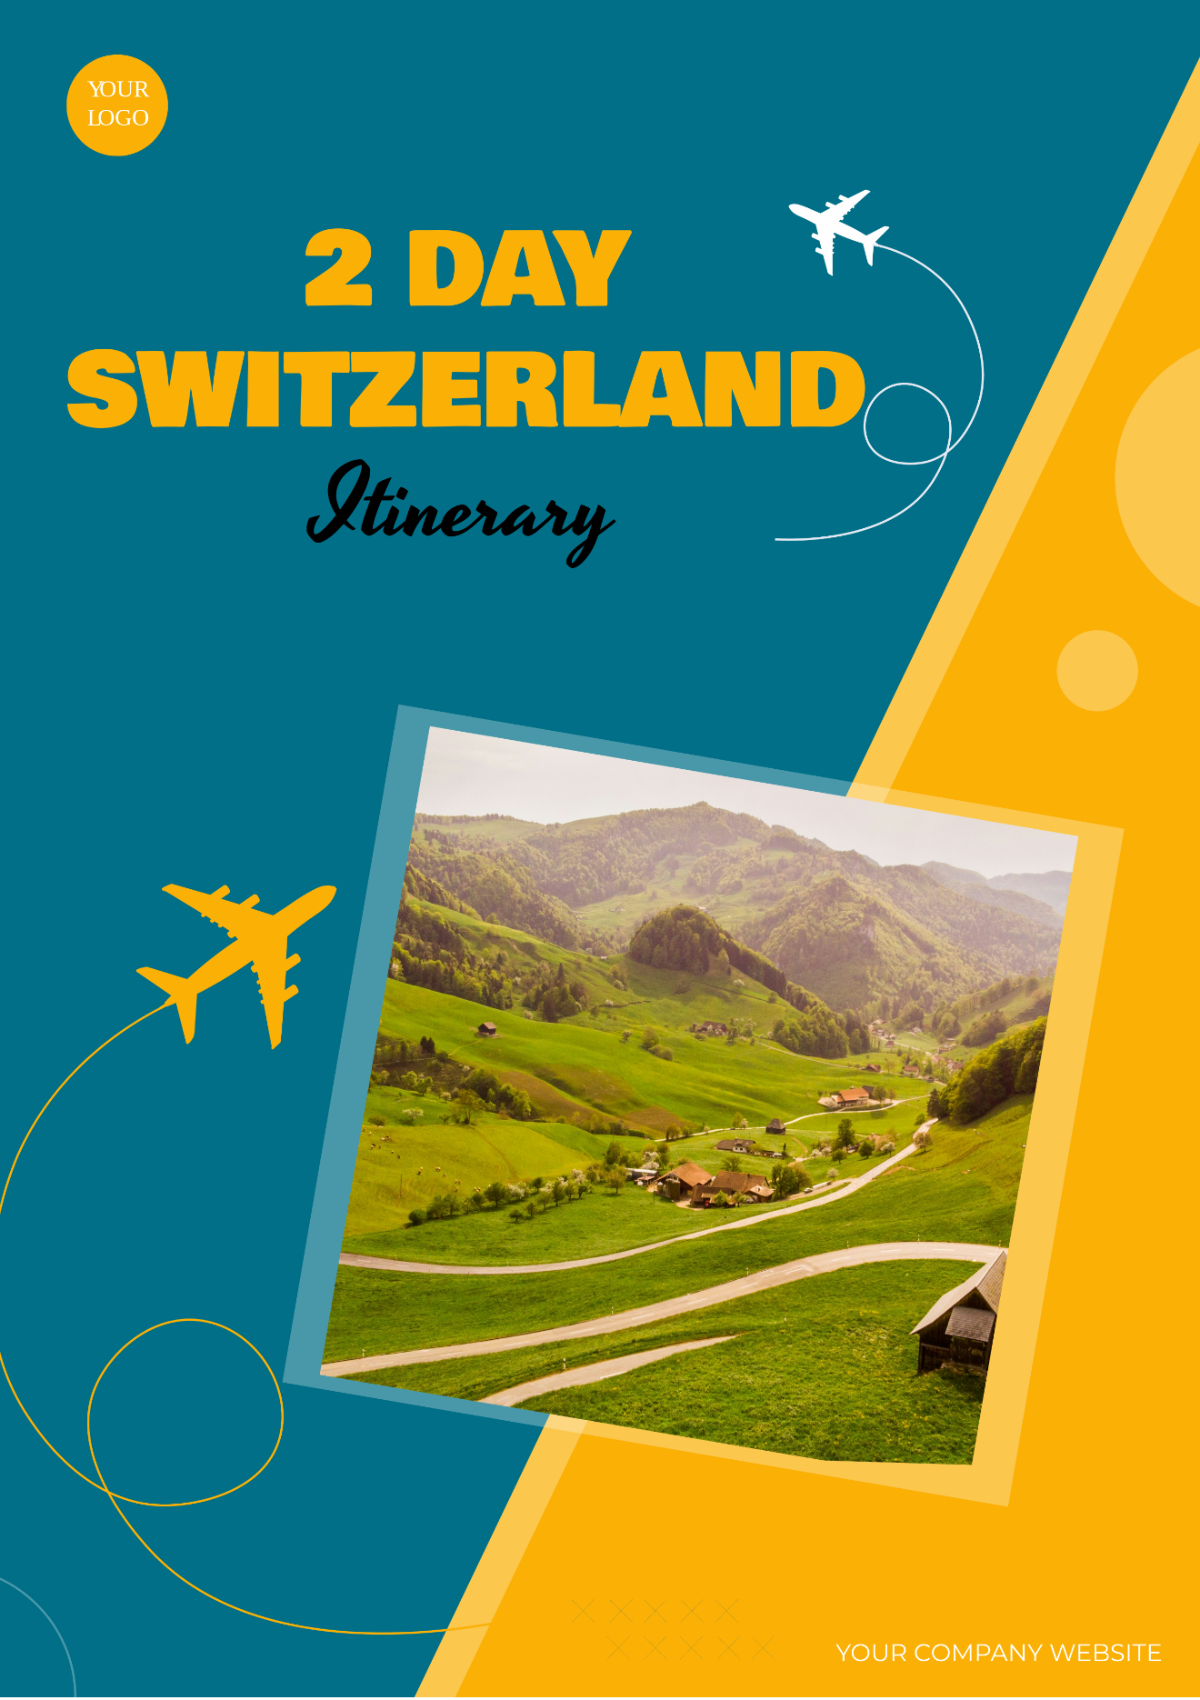 2 Day Switzerland Itinerary Template